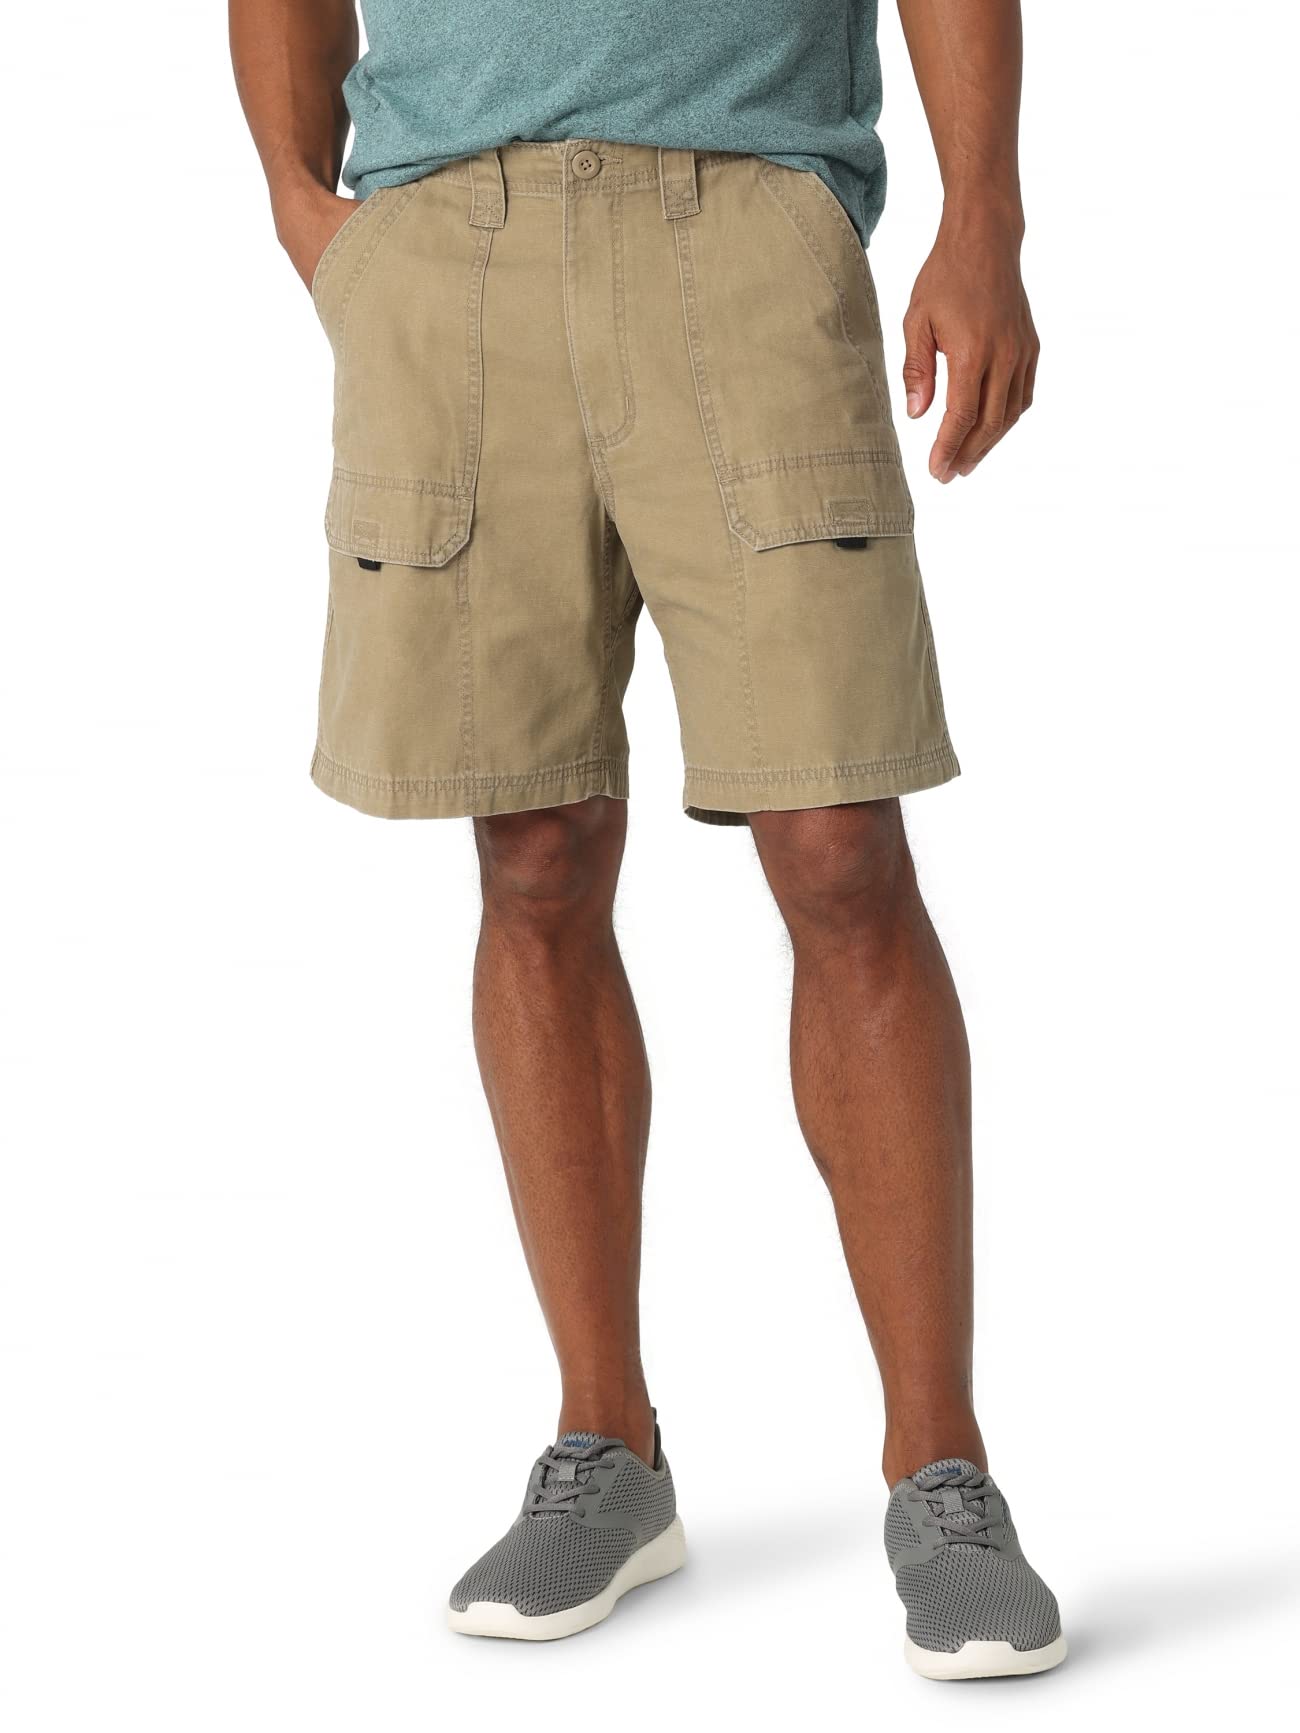 Best hiking shorts